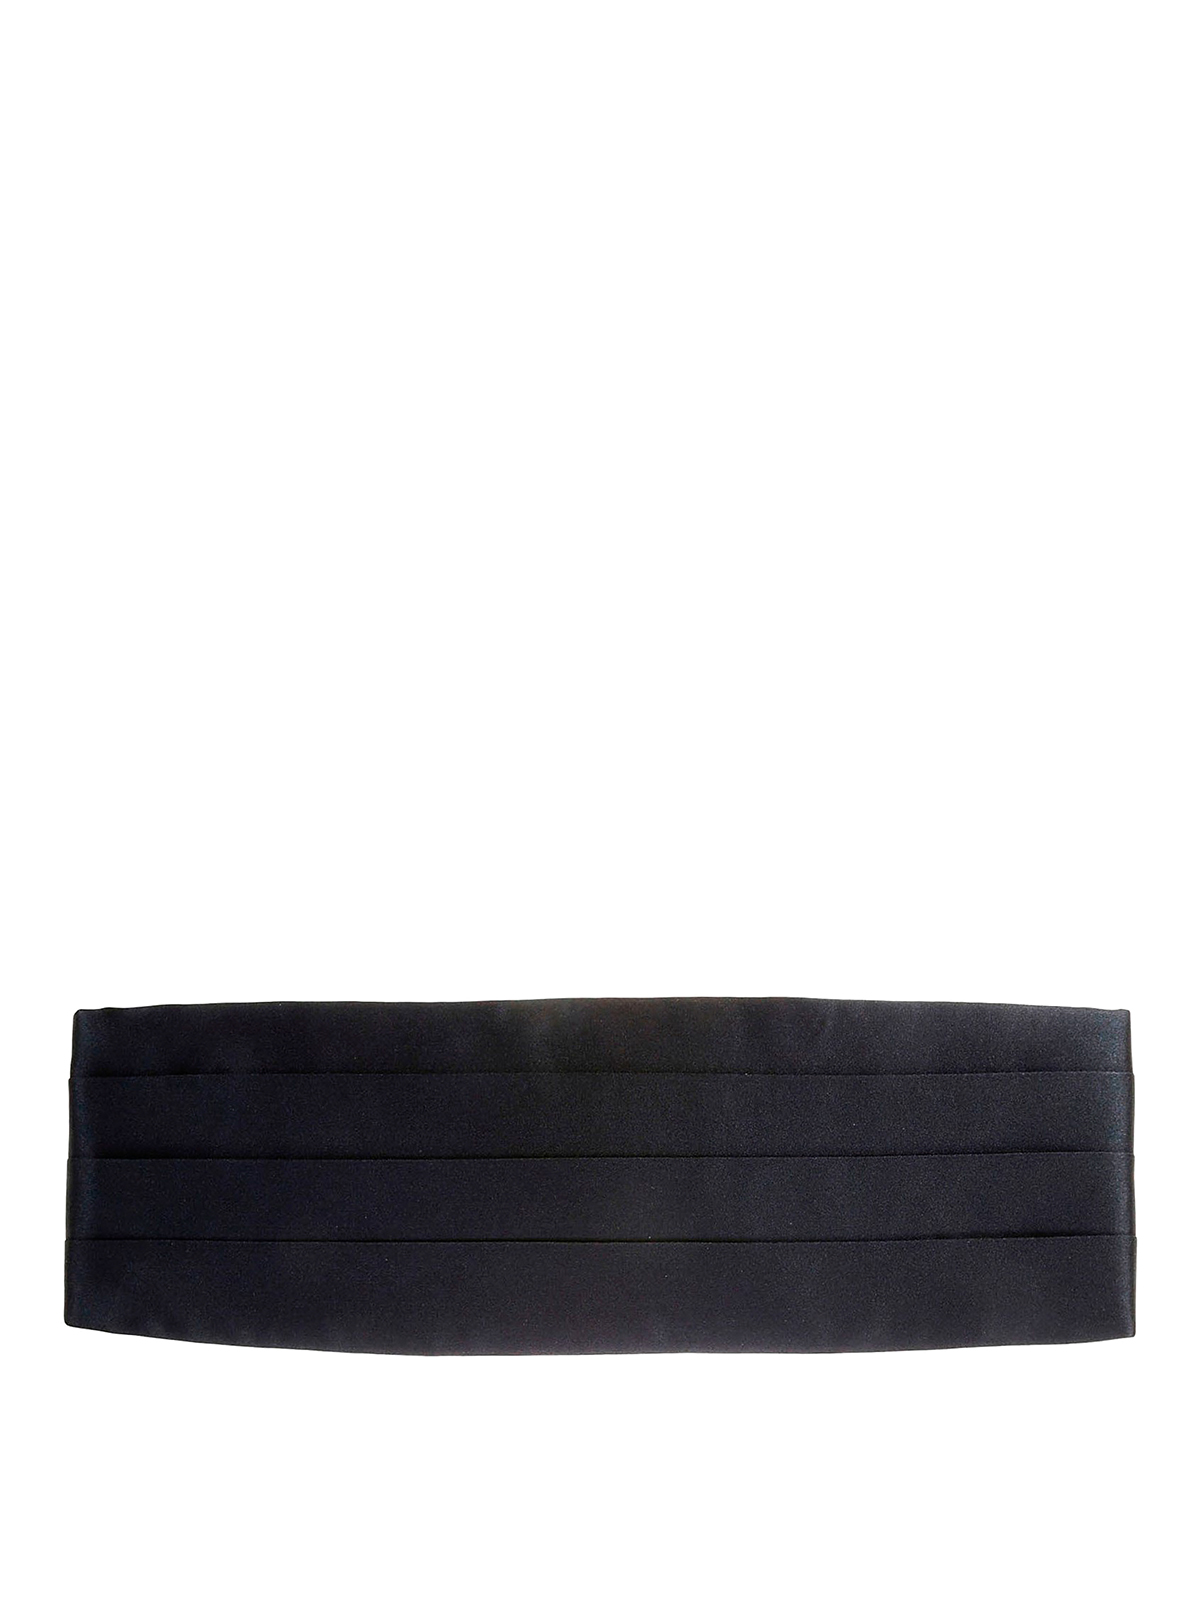 Belts Z Zegna - Silk tuxedo sash - Z3D60T5S7BL1 | Shop online at iKRIX